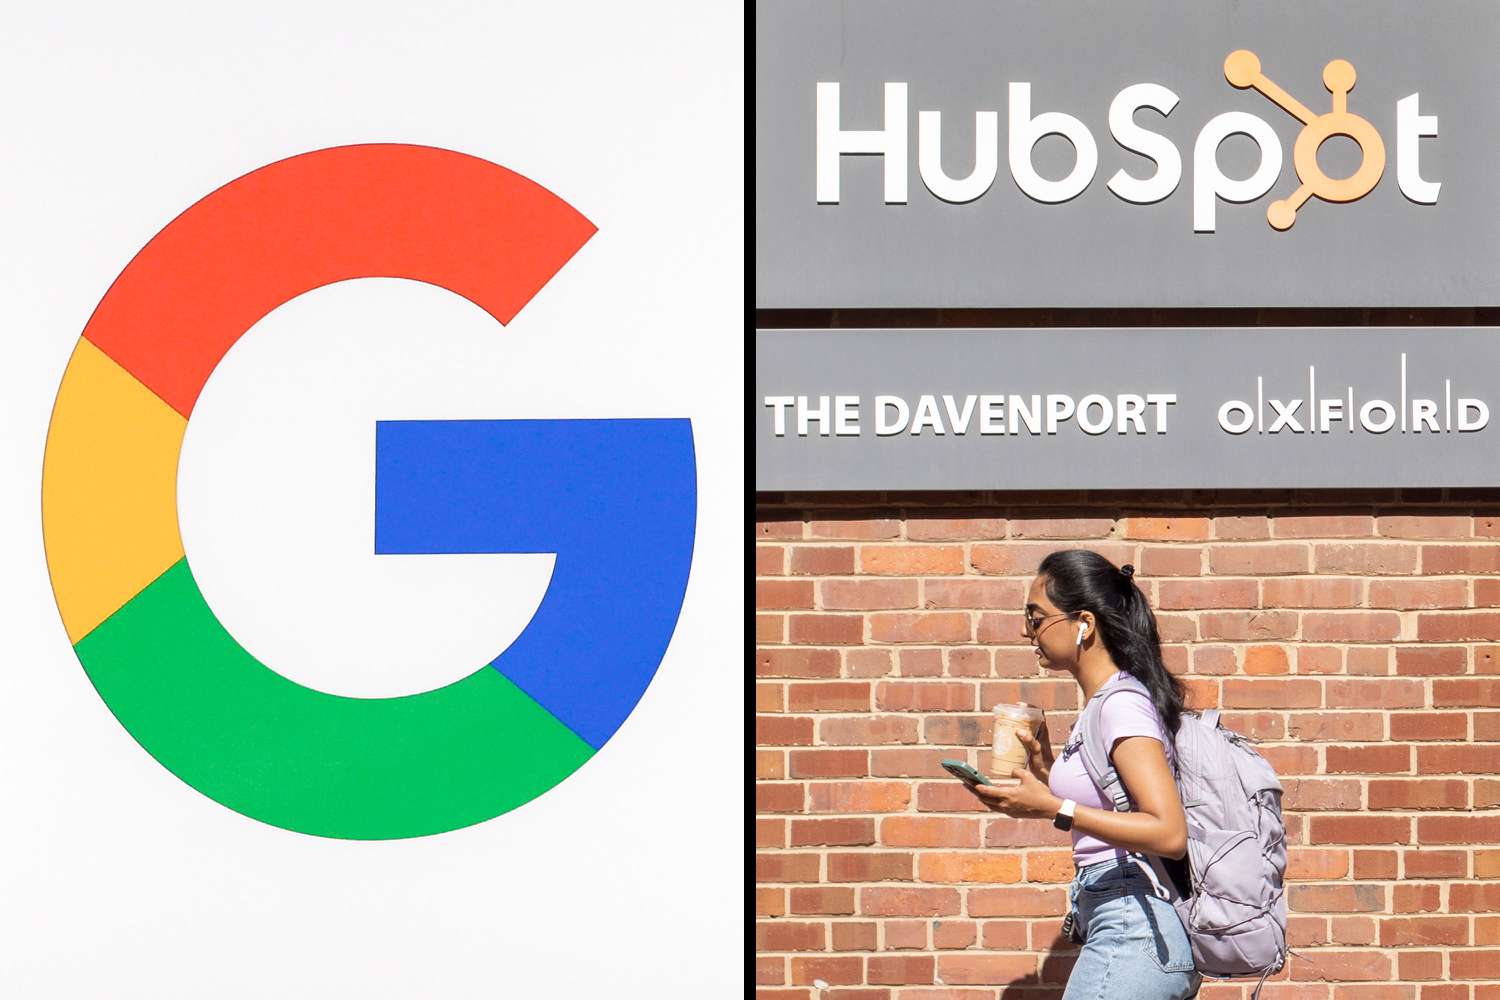 HubSpot Stock Jumps Amid Reports Google Parent Alphabet Considering Acquisition [Video]